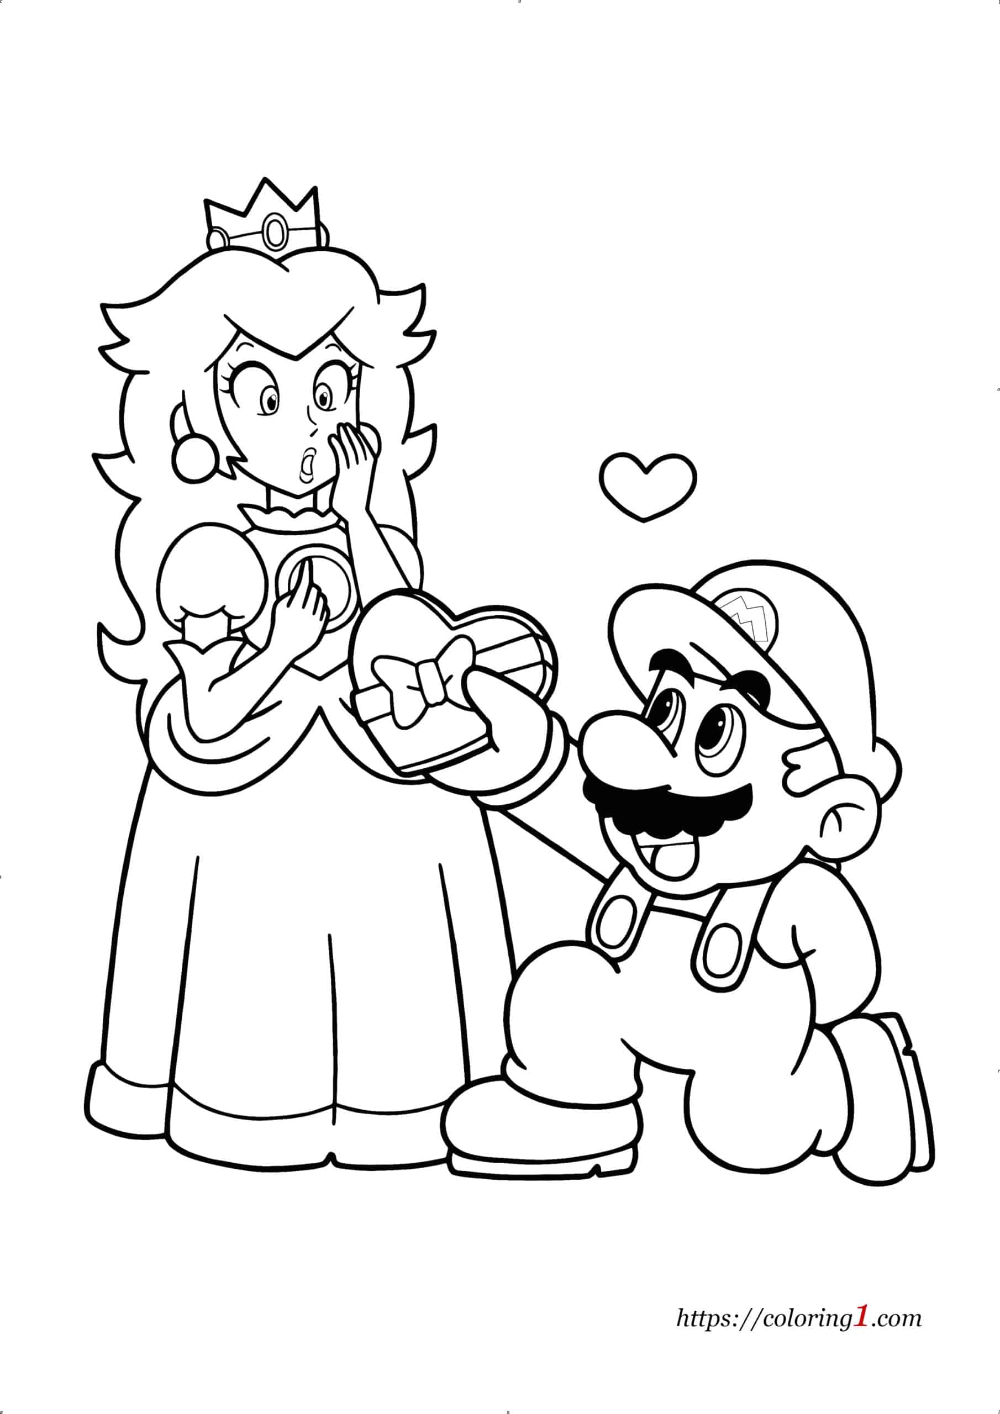 Mario And Peach Coloring Pages - 2 Free Coloring Sheets (2021) Super à Coloriage Mario Luigi